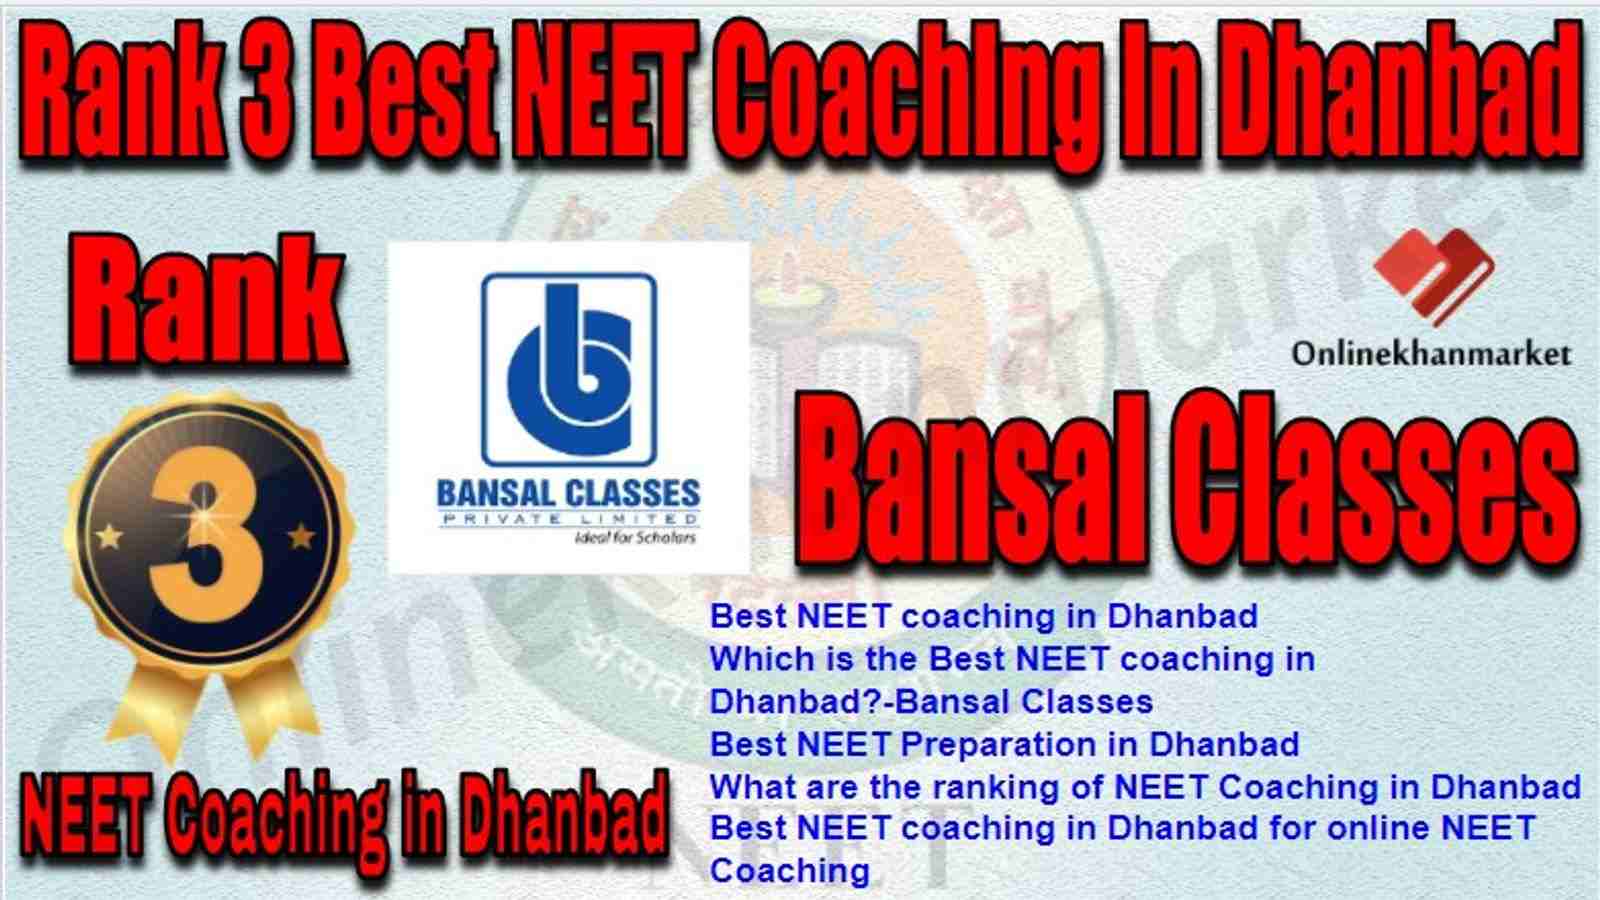 Rank 3 Best NEET Coaching dhanbad